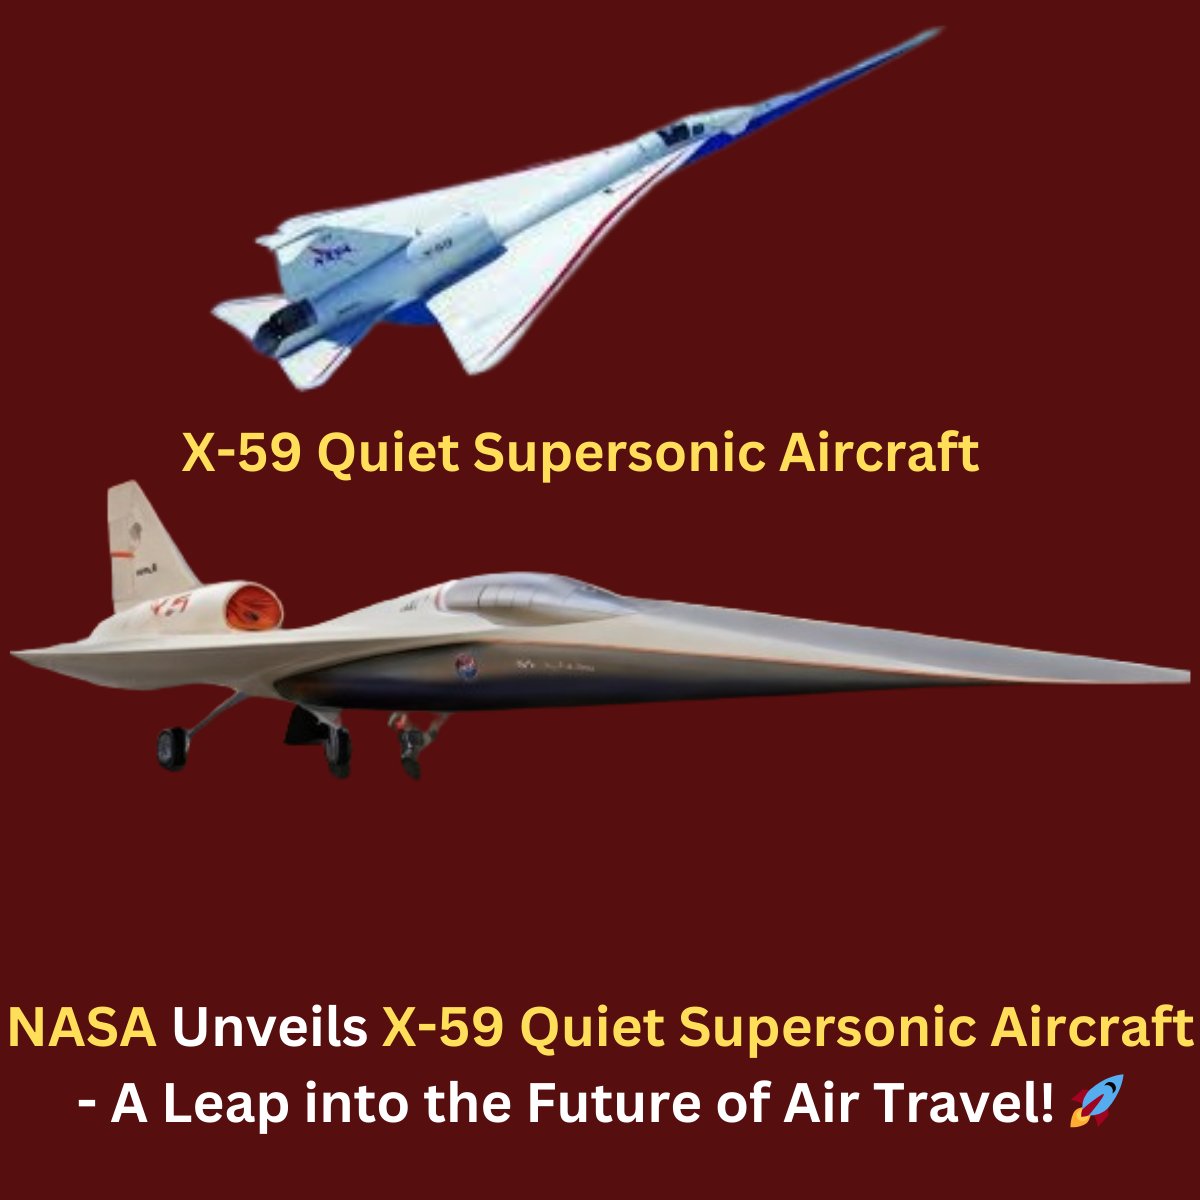 NASA Unveils X-59 Quiet Supersonic Aircraft - A Leap into the Future of Air Travel! 🚀
#Spacenews #LockheedMartin #NASA #SupersonicRevolution #X59Aircraft #FutureOfAirTravel
 #NASAInnovation #SupersonicReturn